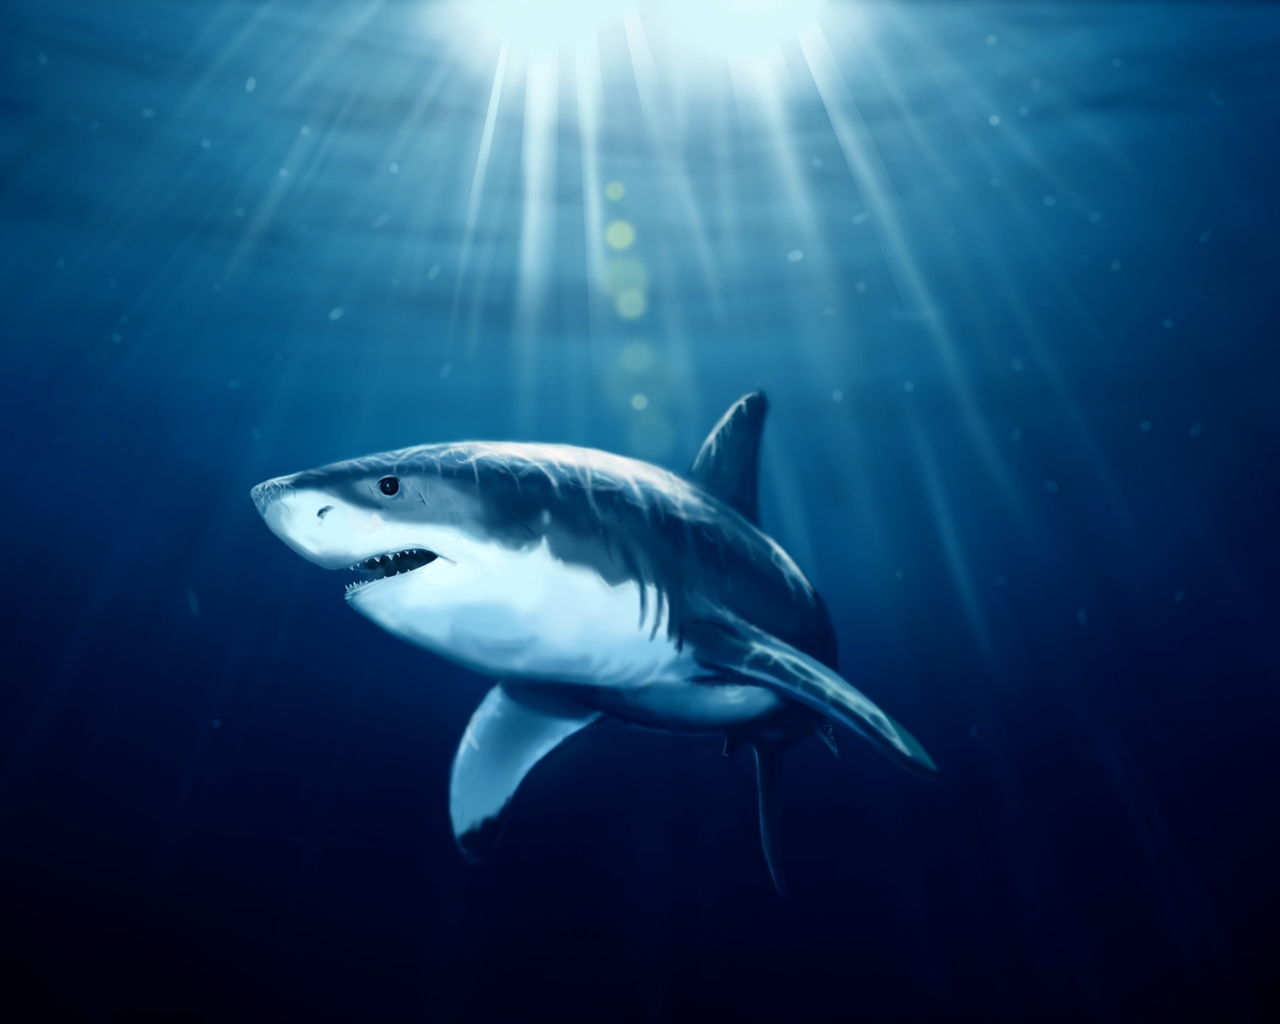 Shark Under Water for 1280 x 1024 resolution